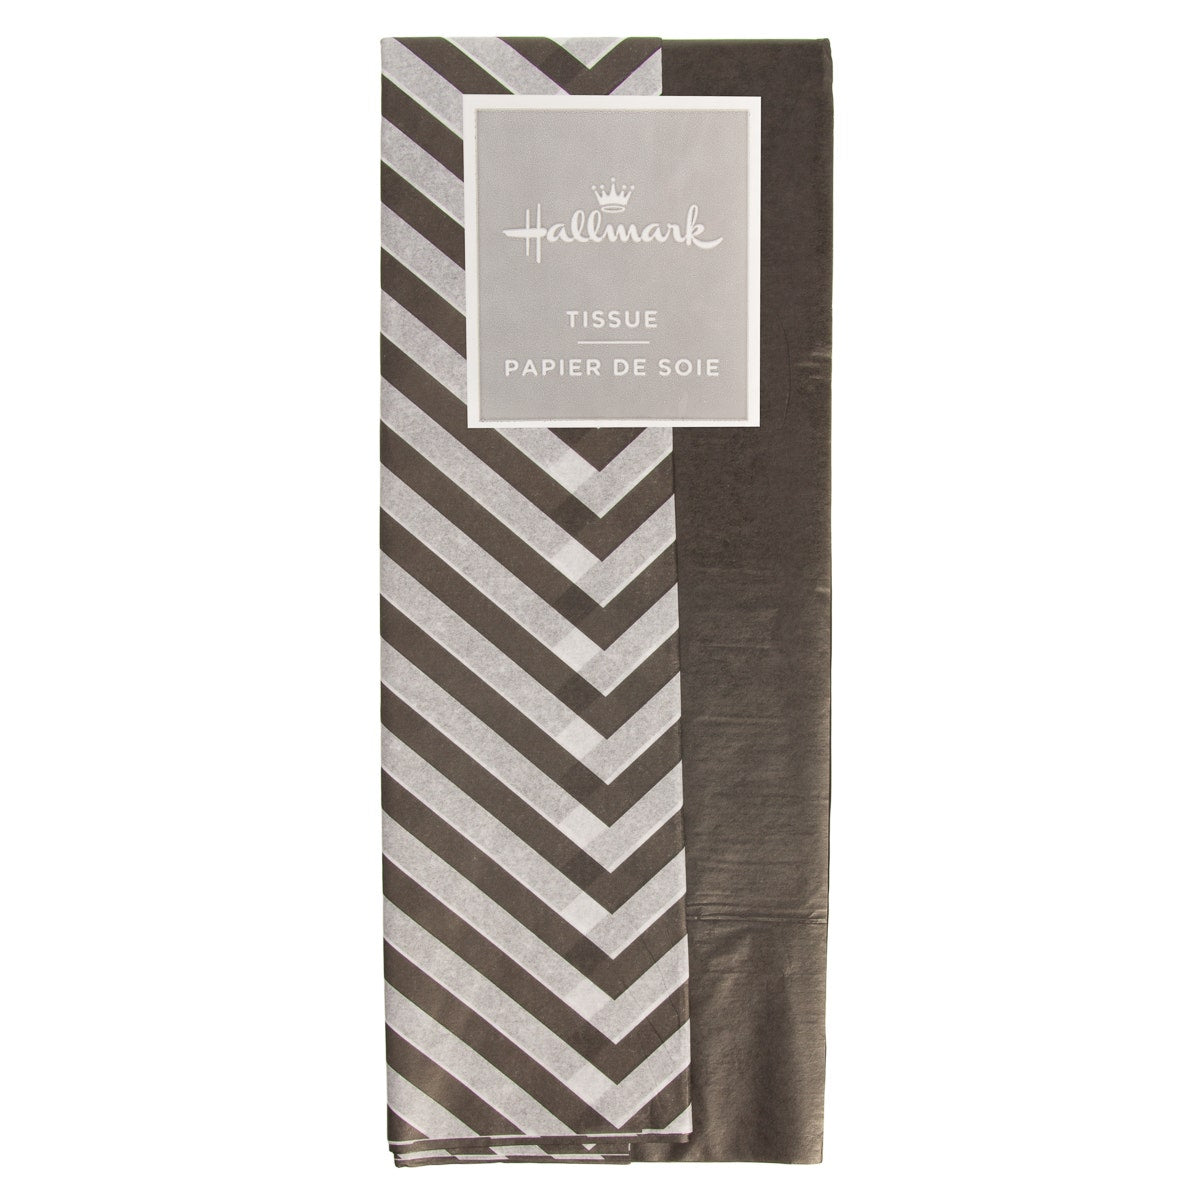 6pk Hallmark Large Gift Wrap Tissue – Birthdays, Holidays & More